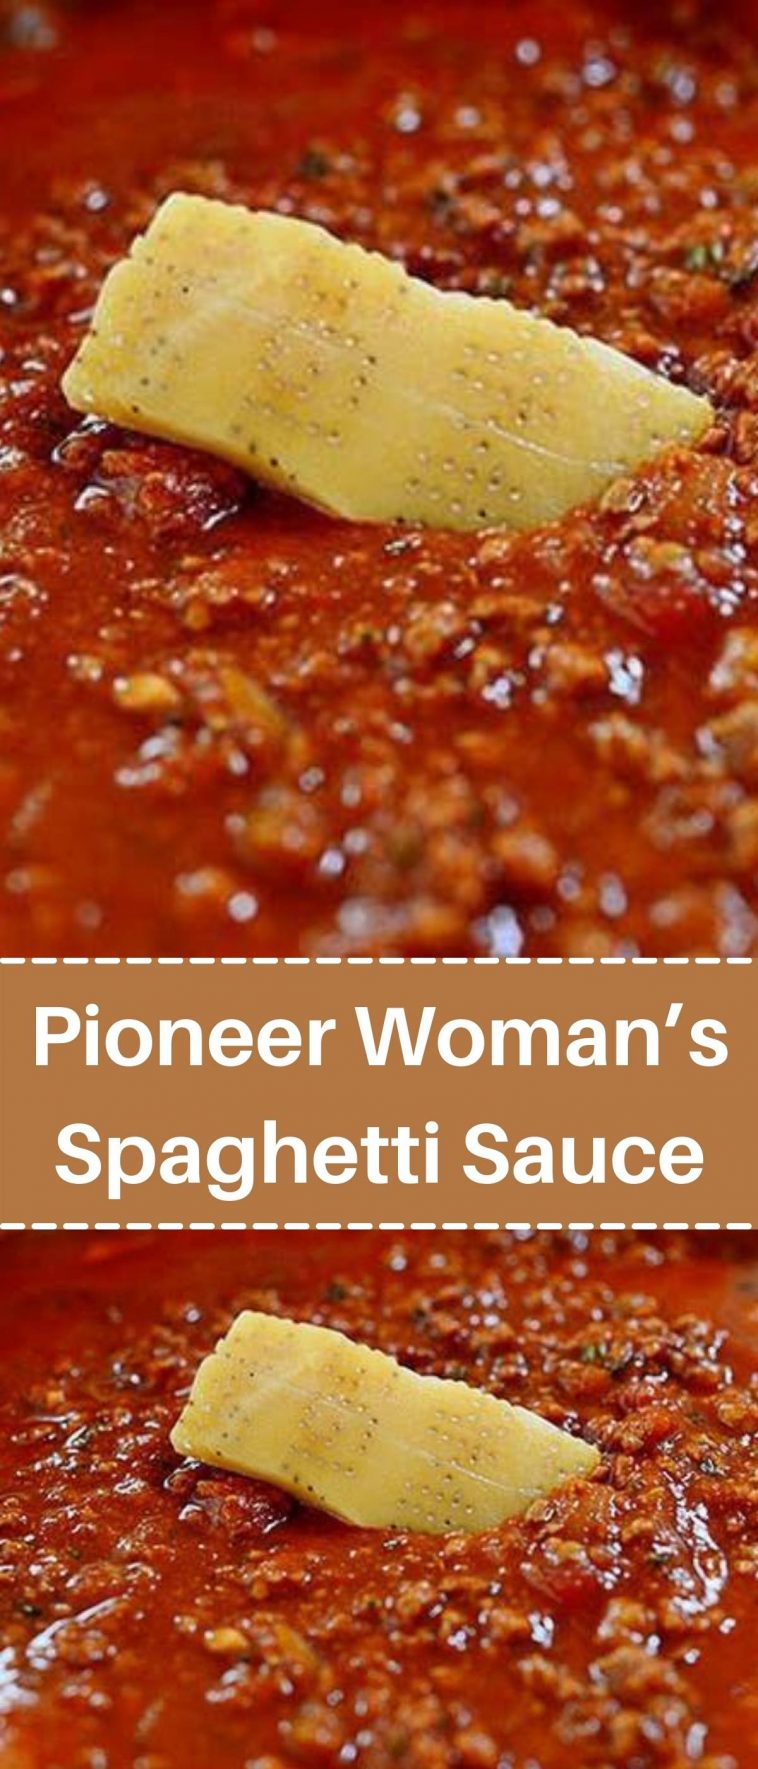 Pioneer Woman’s Spaghetti Sauce